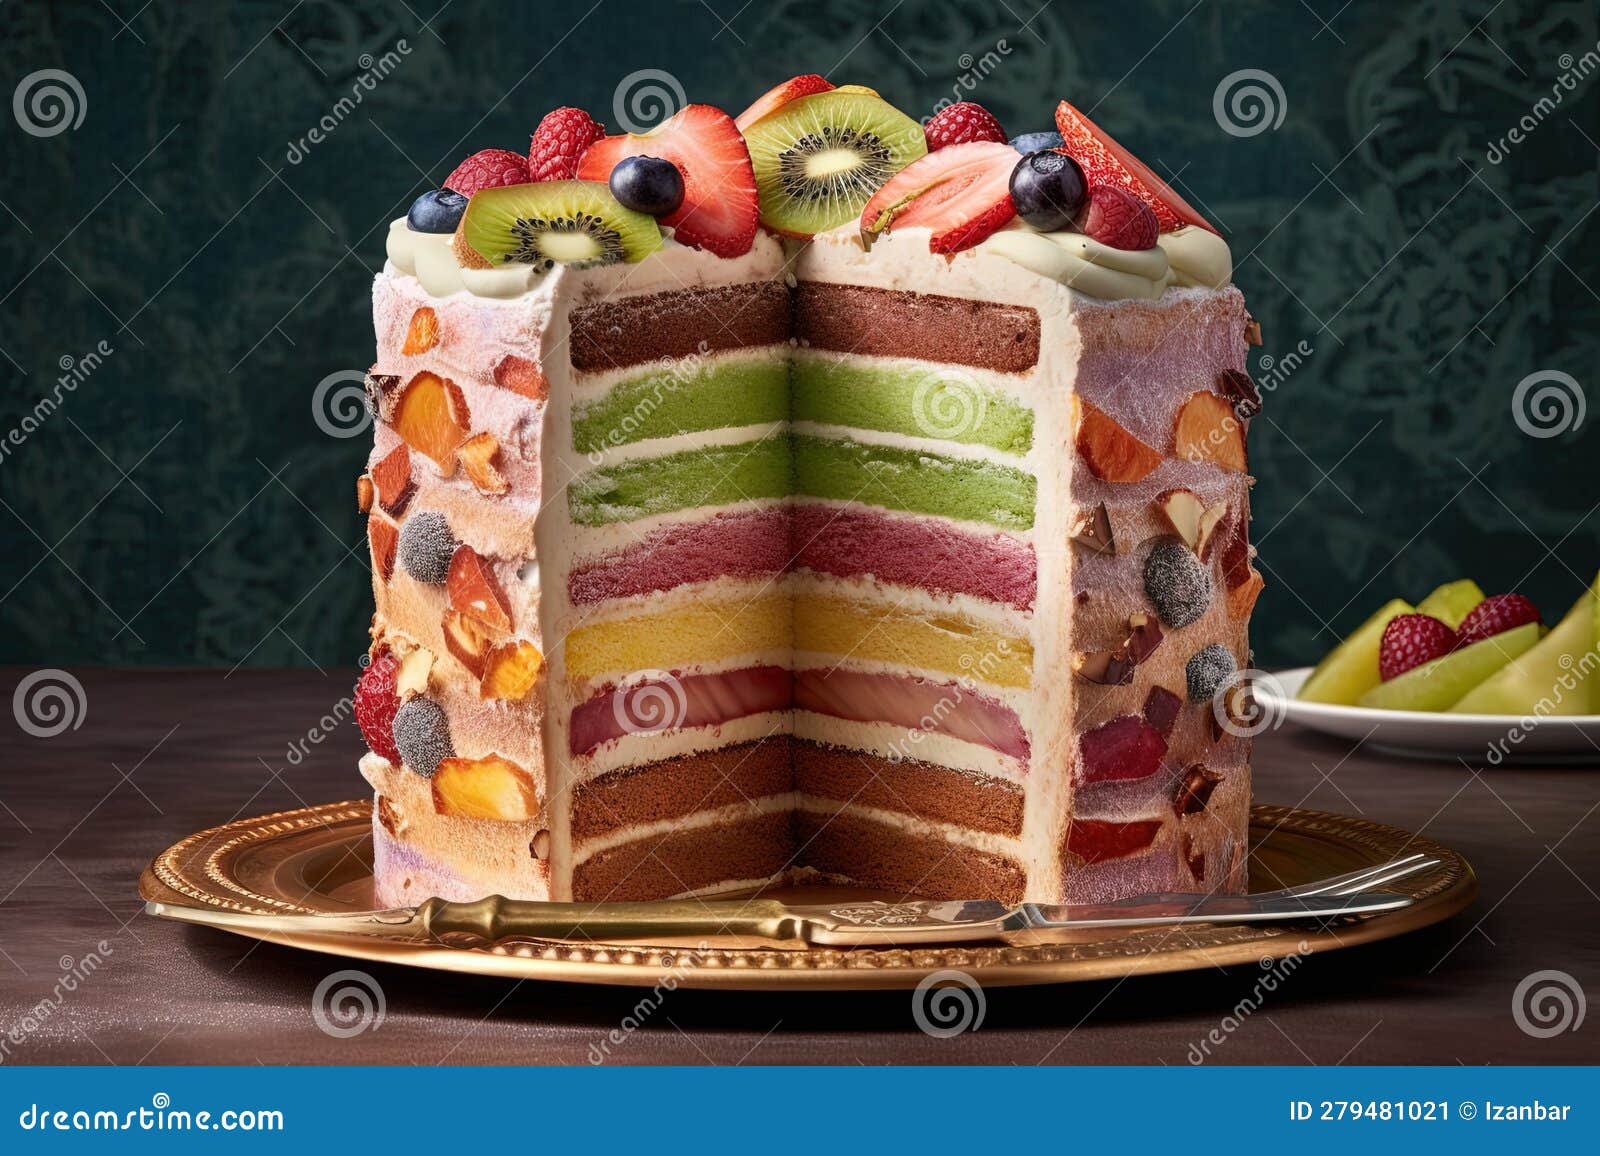 30-Layer Rainbow Mille Crepe Cake - Indulge With Mimi